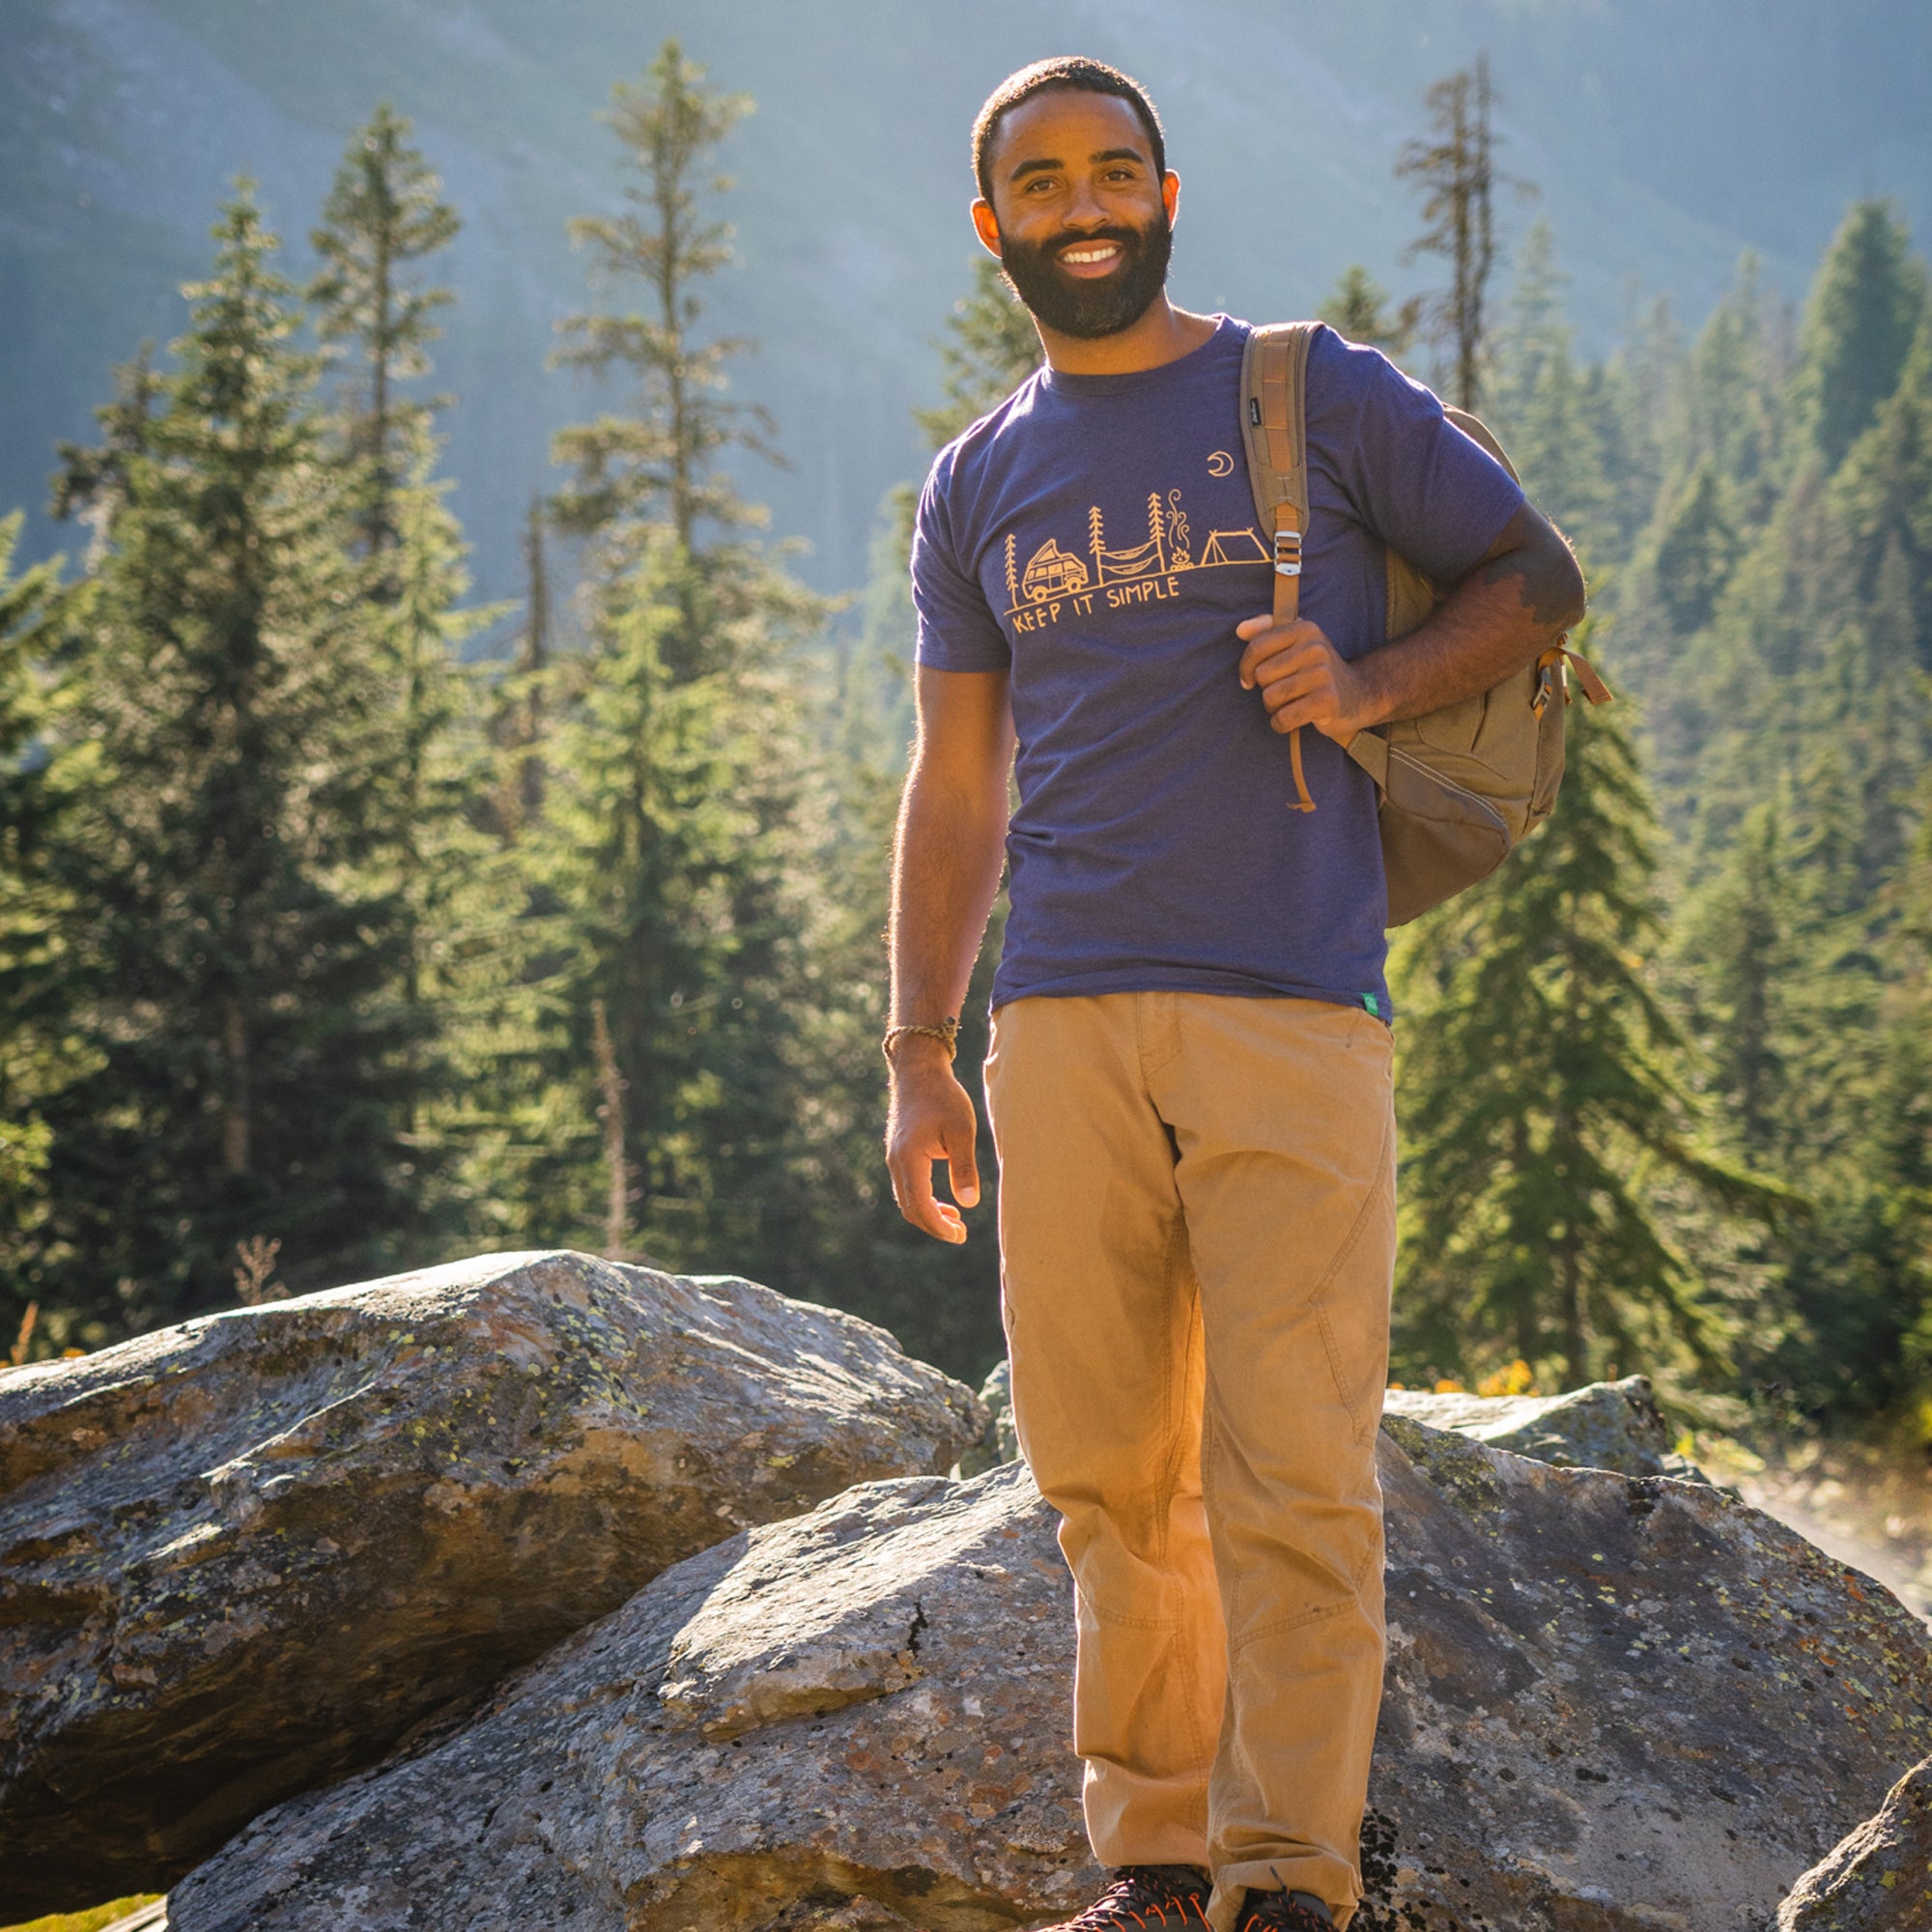 Wild Shirt, Camping Tshirt, Hiking Shirt, Mountains, Nature Lover